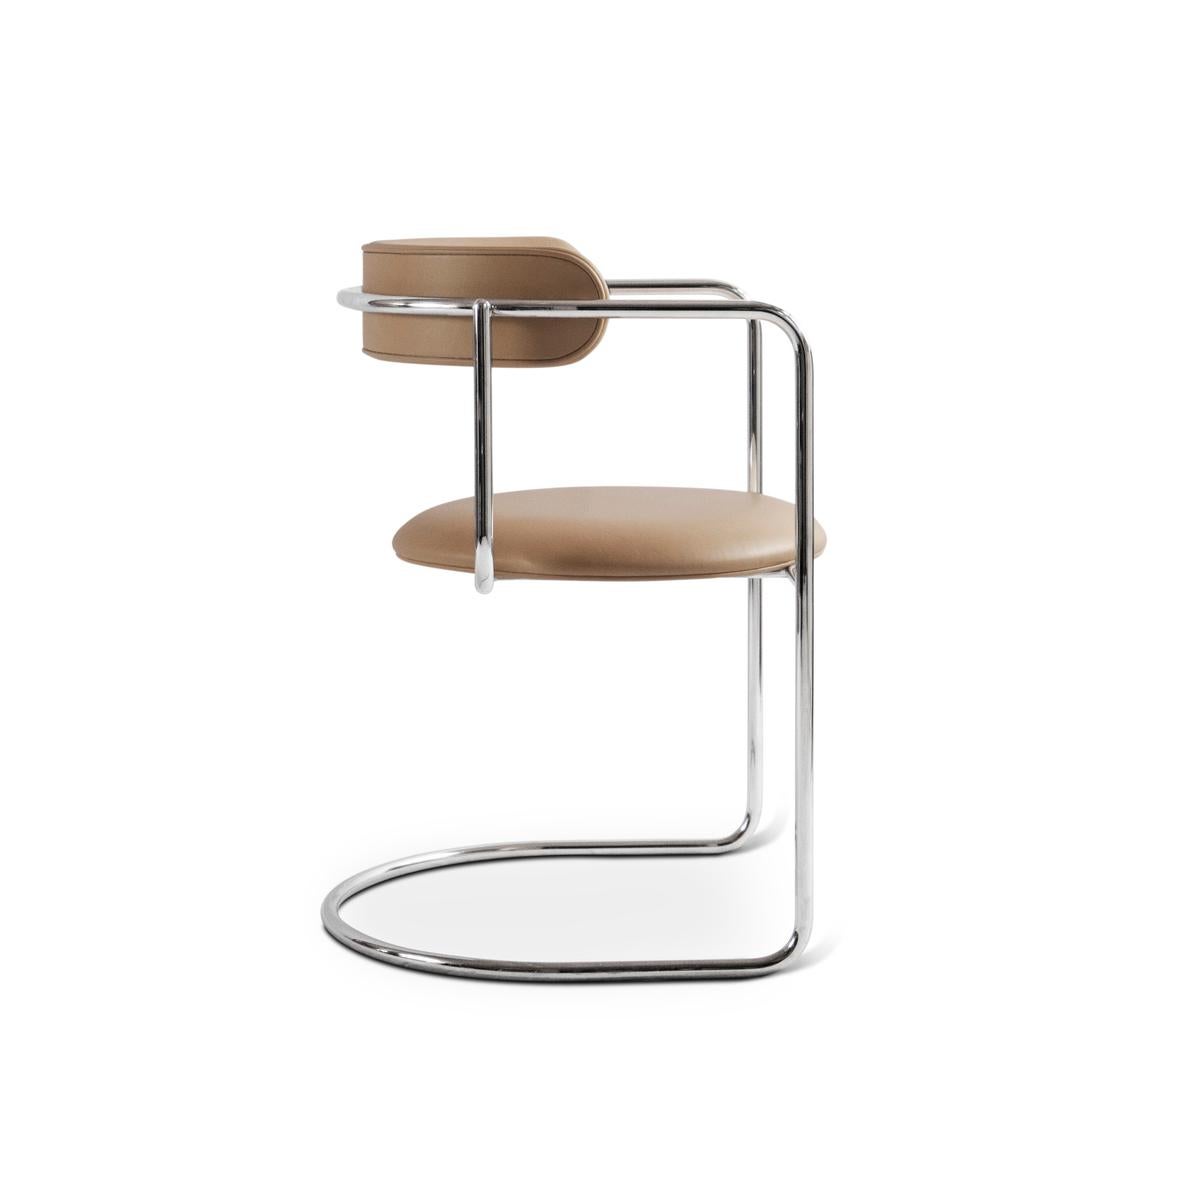 Organic Modern Contemporary Chair 'FF Cantilever' Dakar Leather, 0197, Chrome Legs For Sale